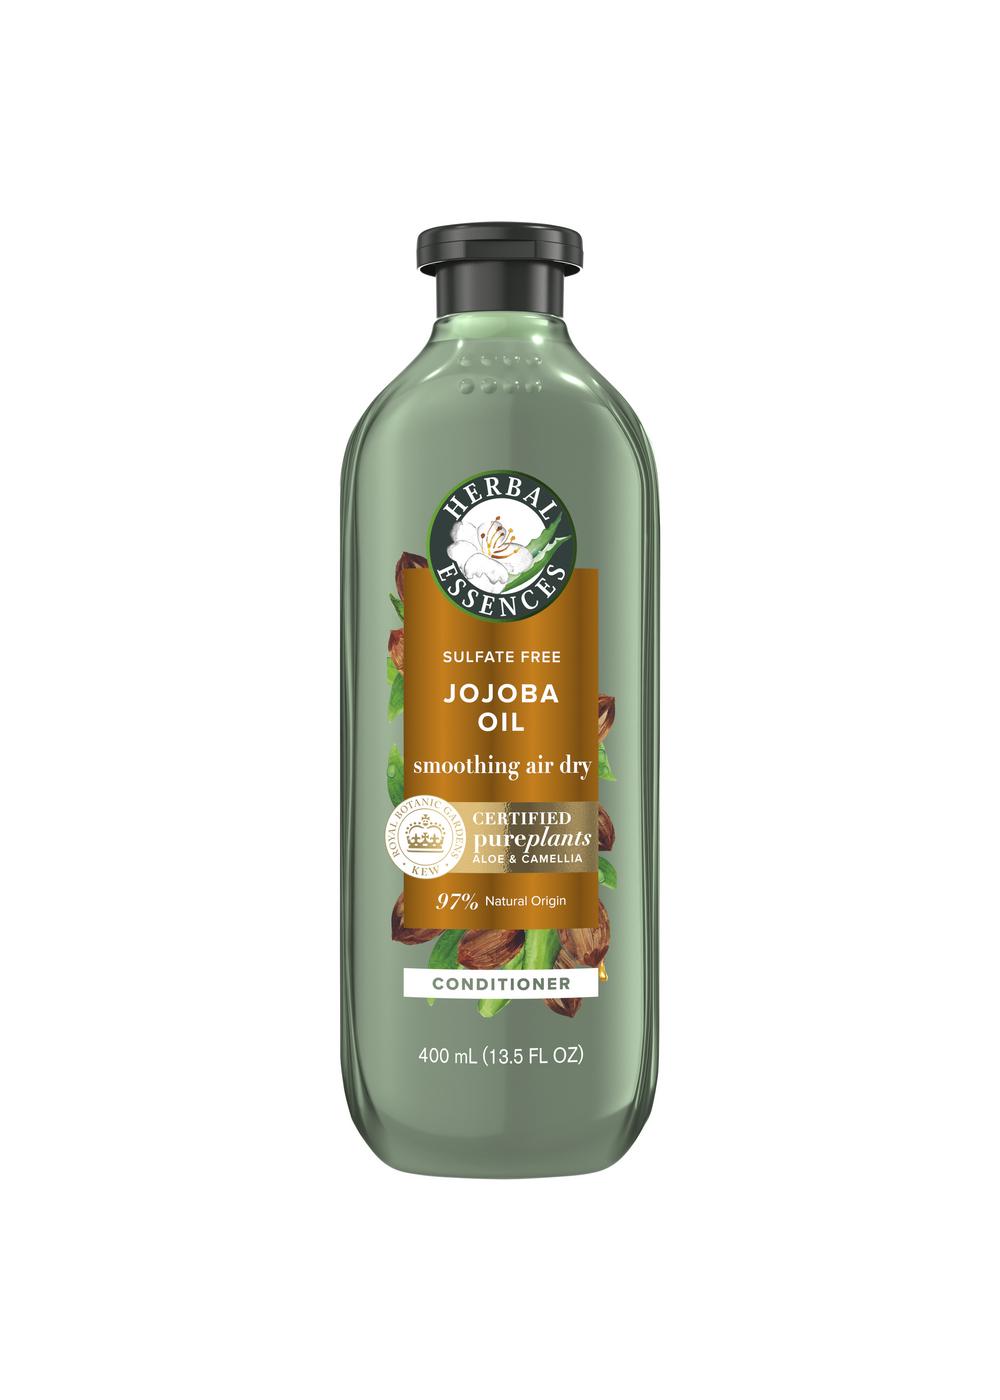 Herbal Essences Jojoba Oil Sulfate Free Conditioner; image 1 of 12